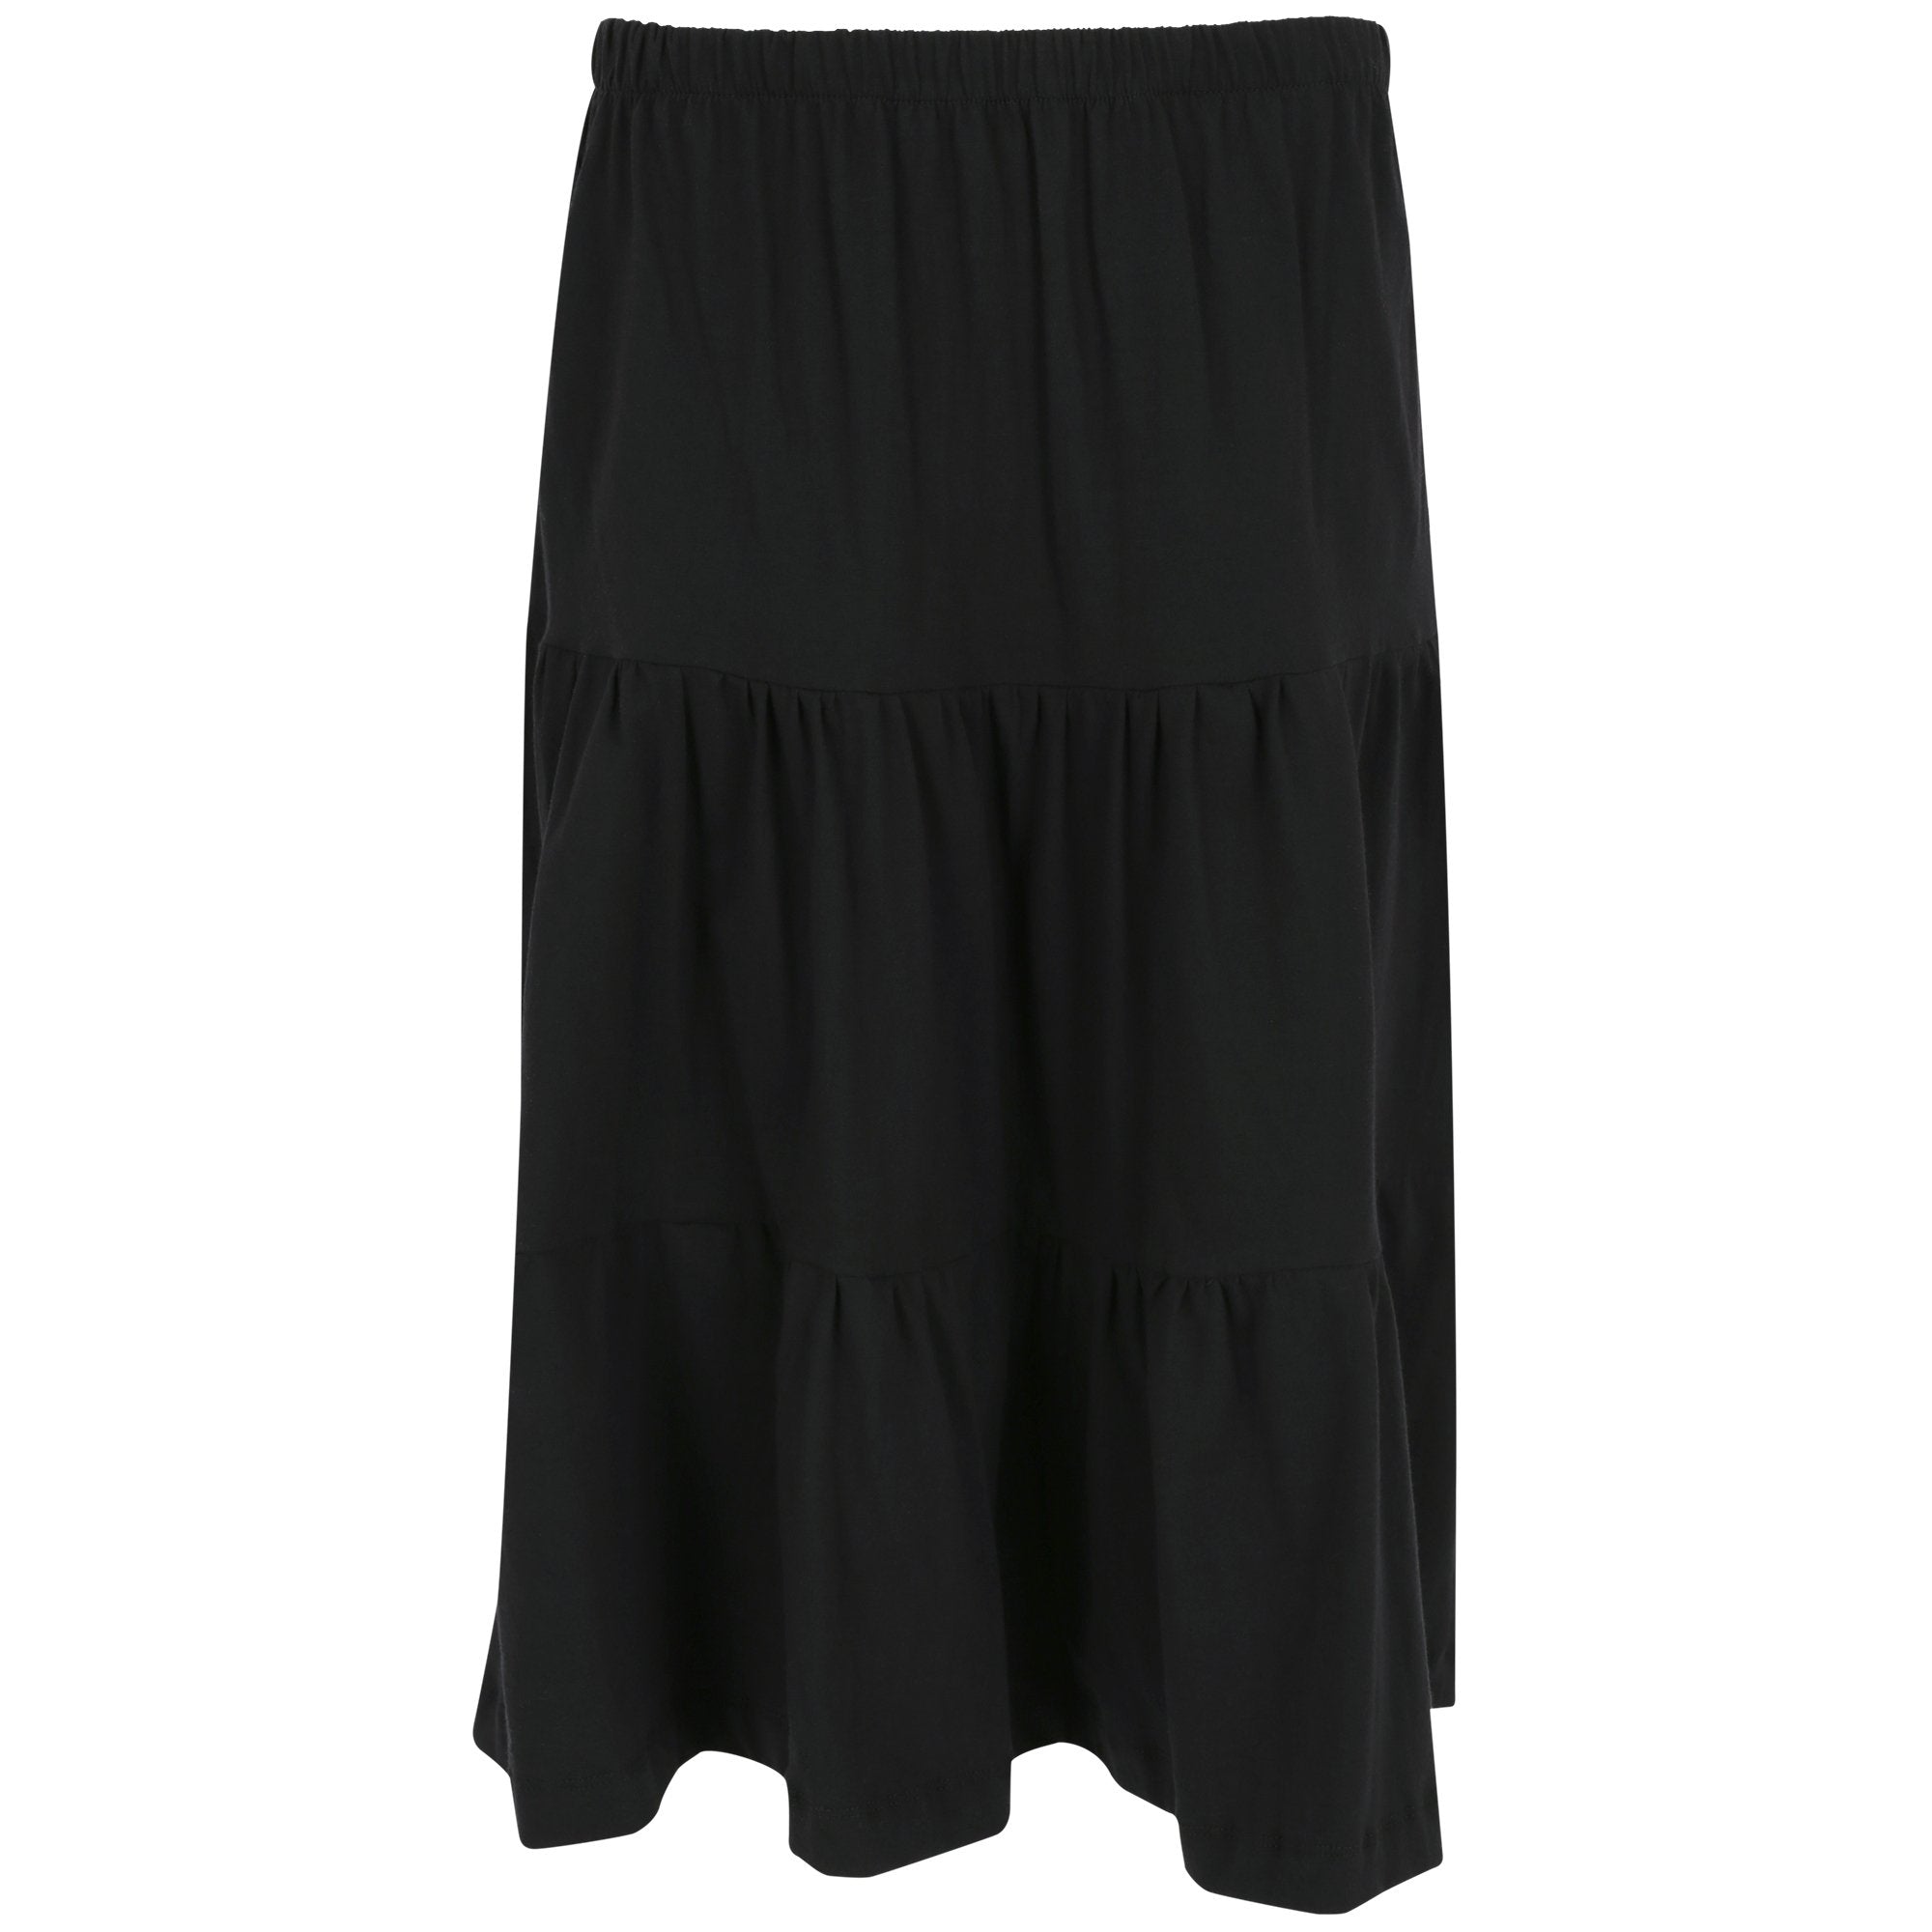 Organic Tiered Travel Skirt - Black - S